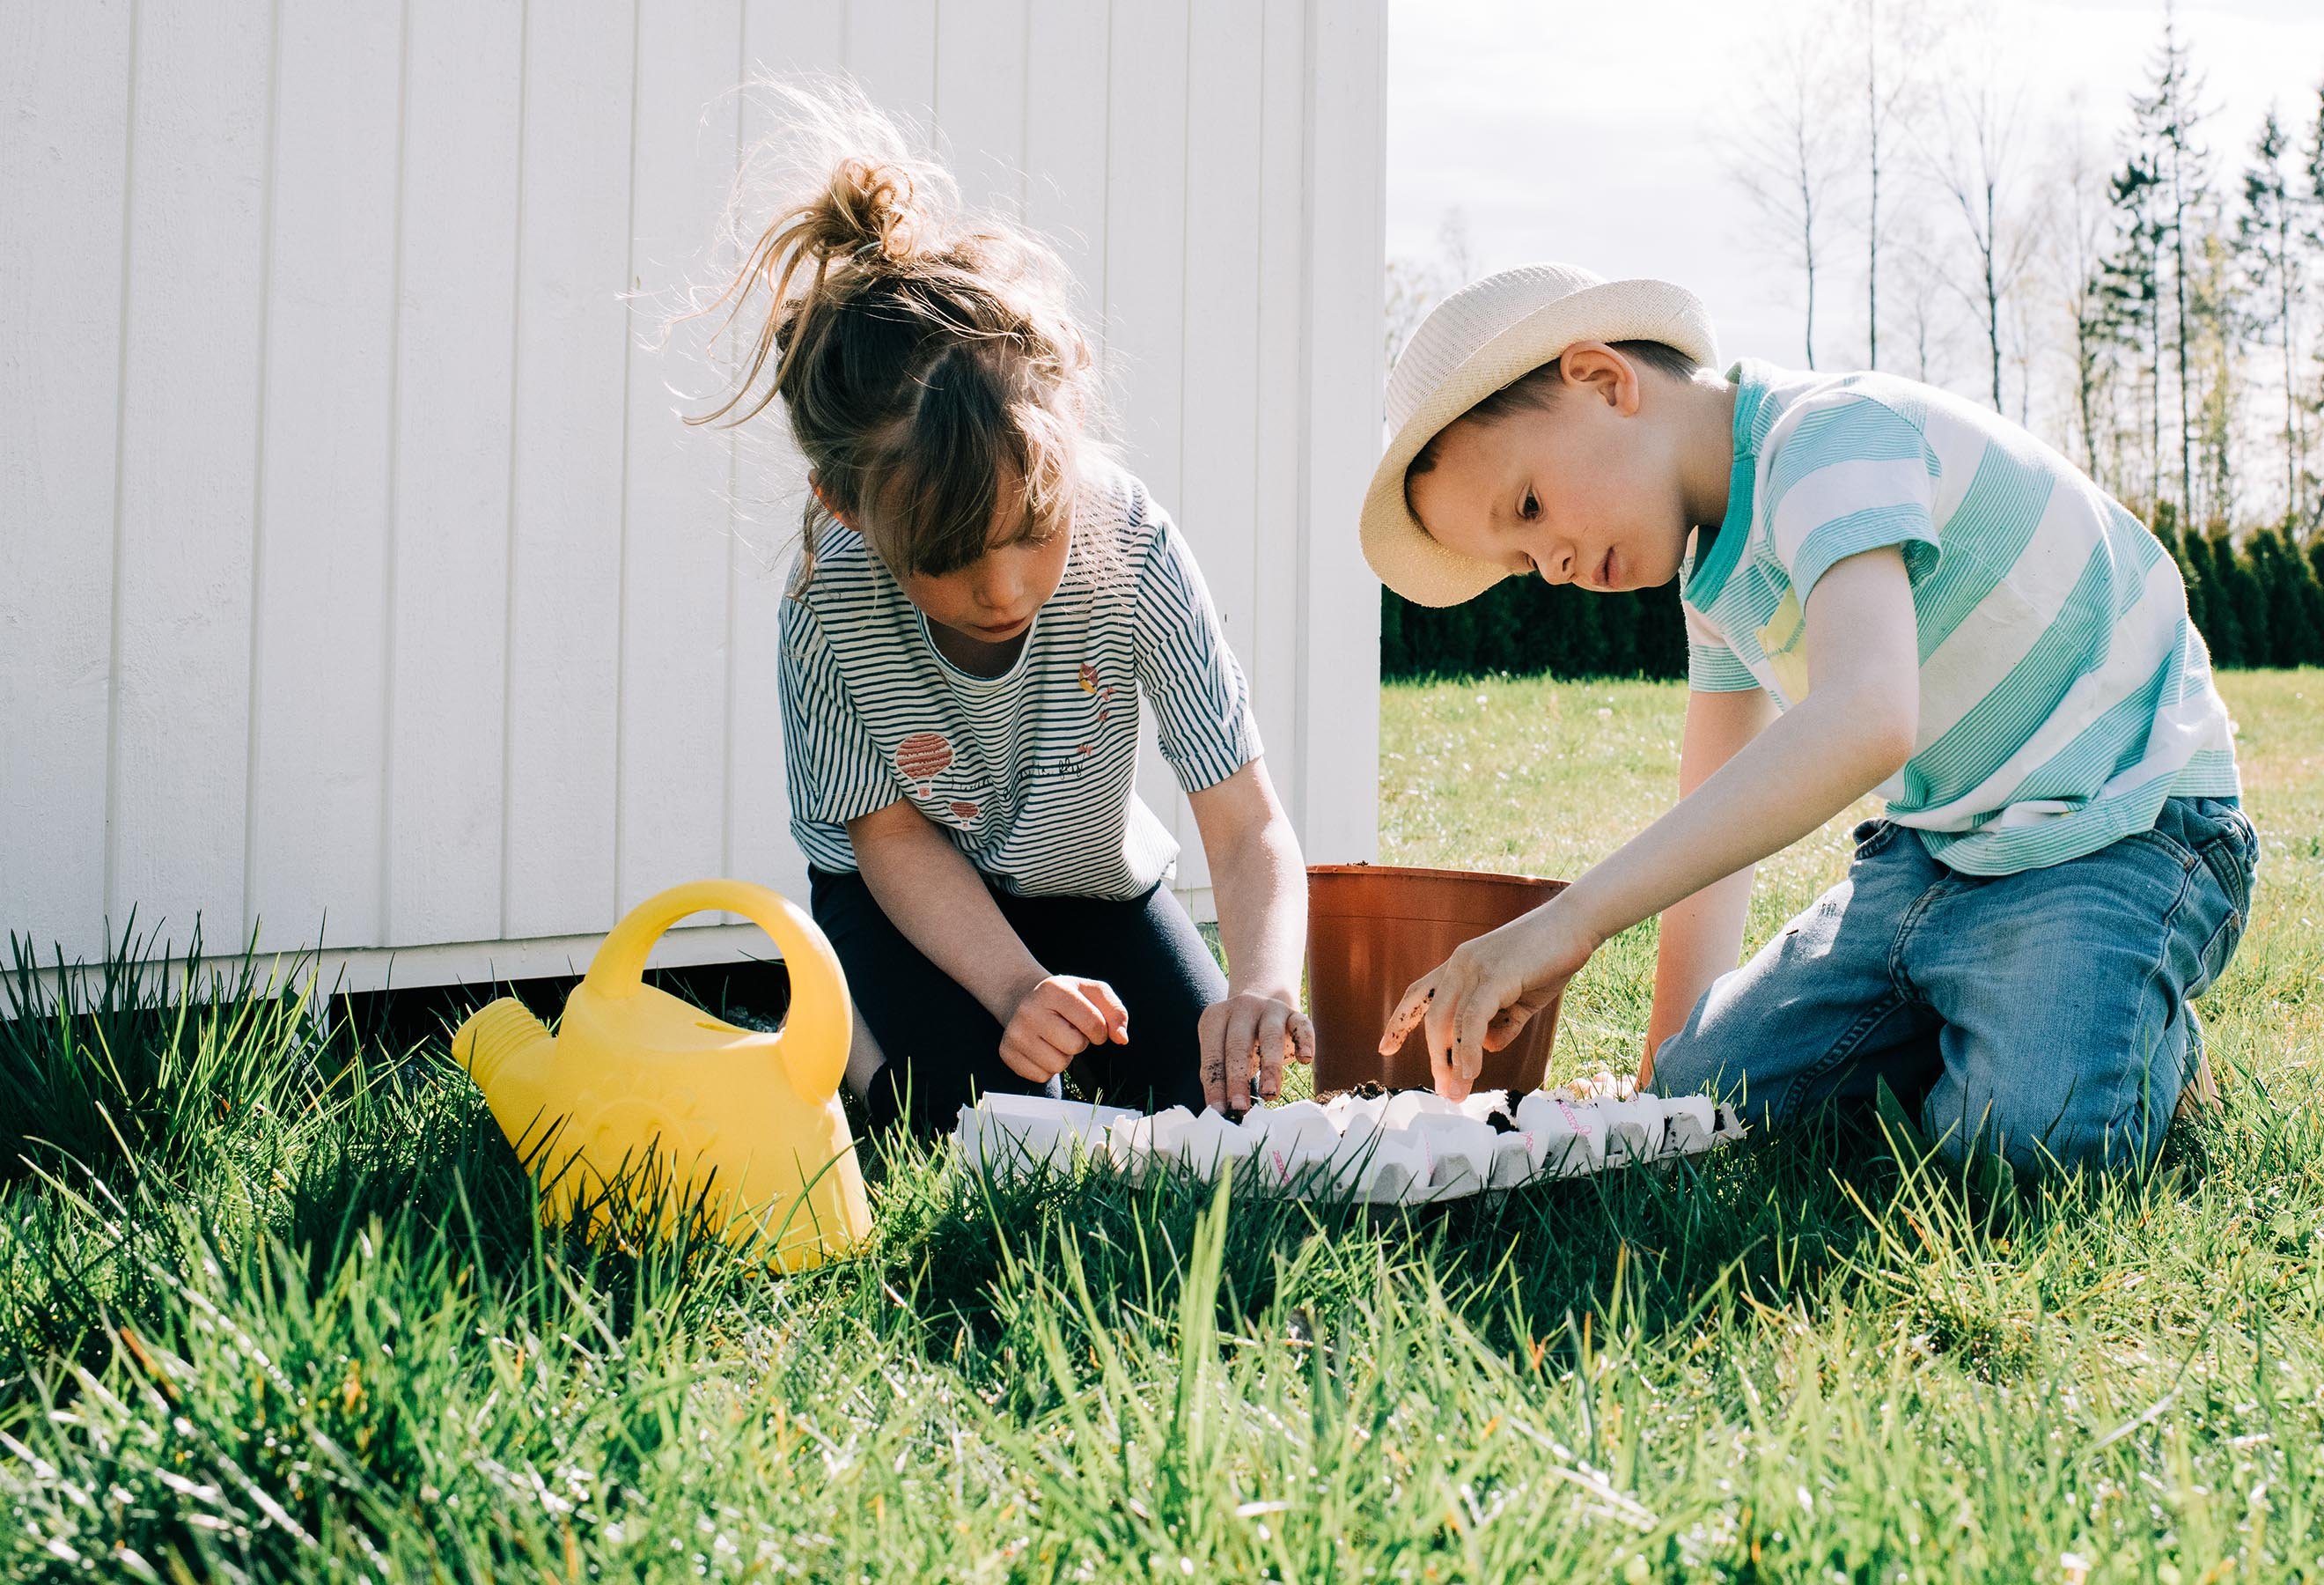 To barn leker med egg i hagen